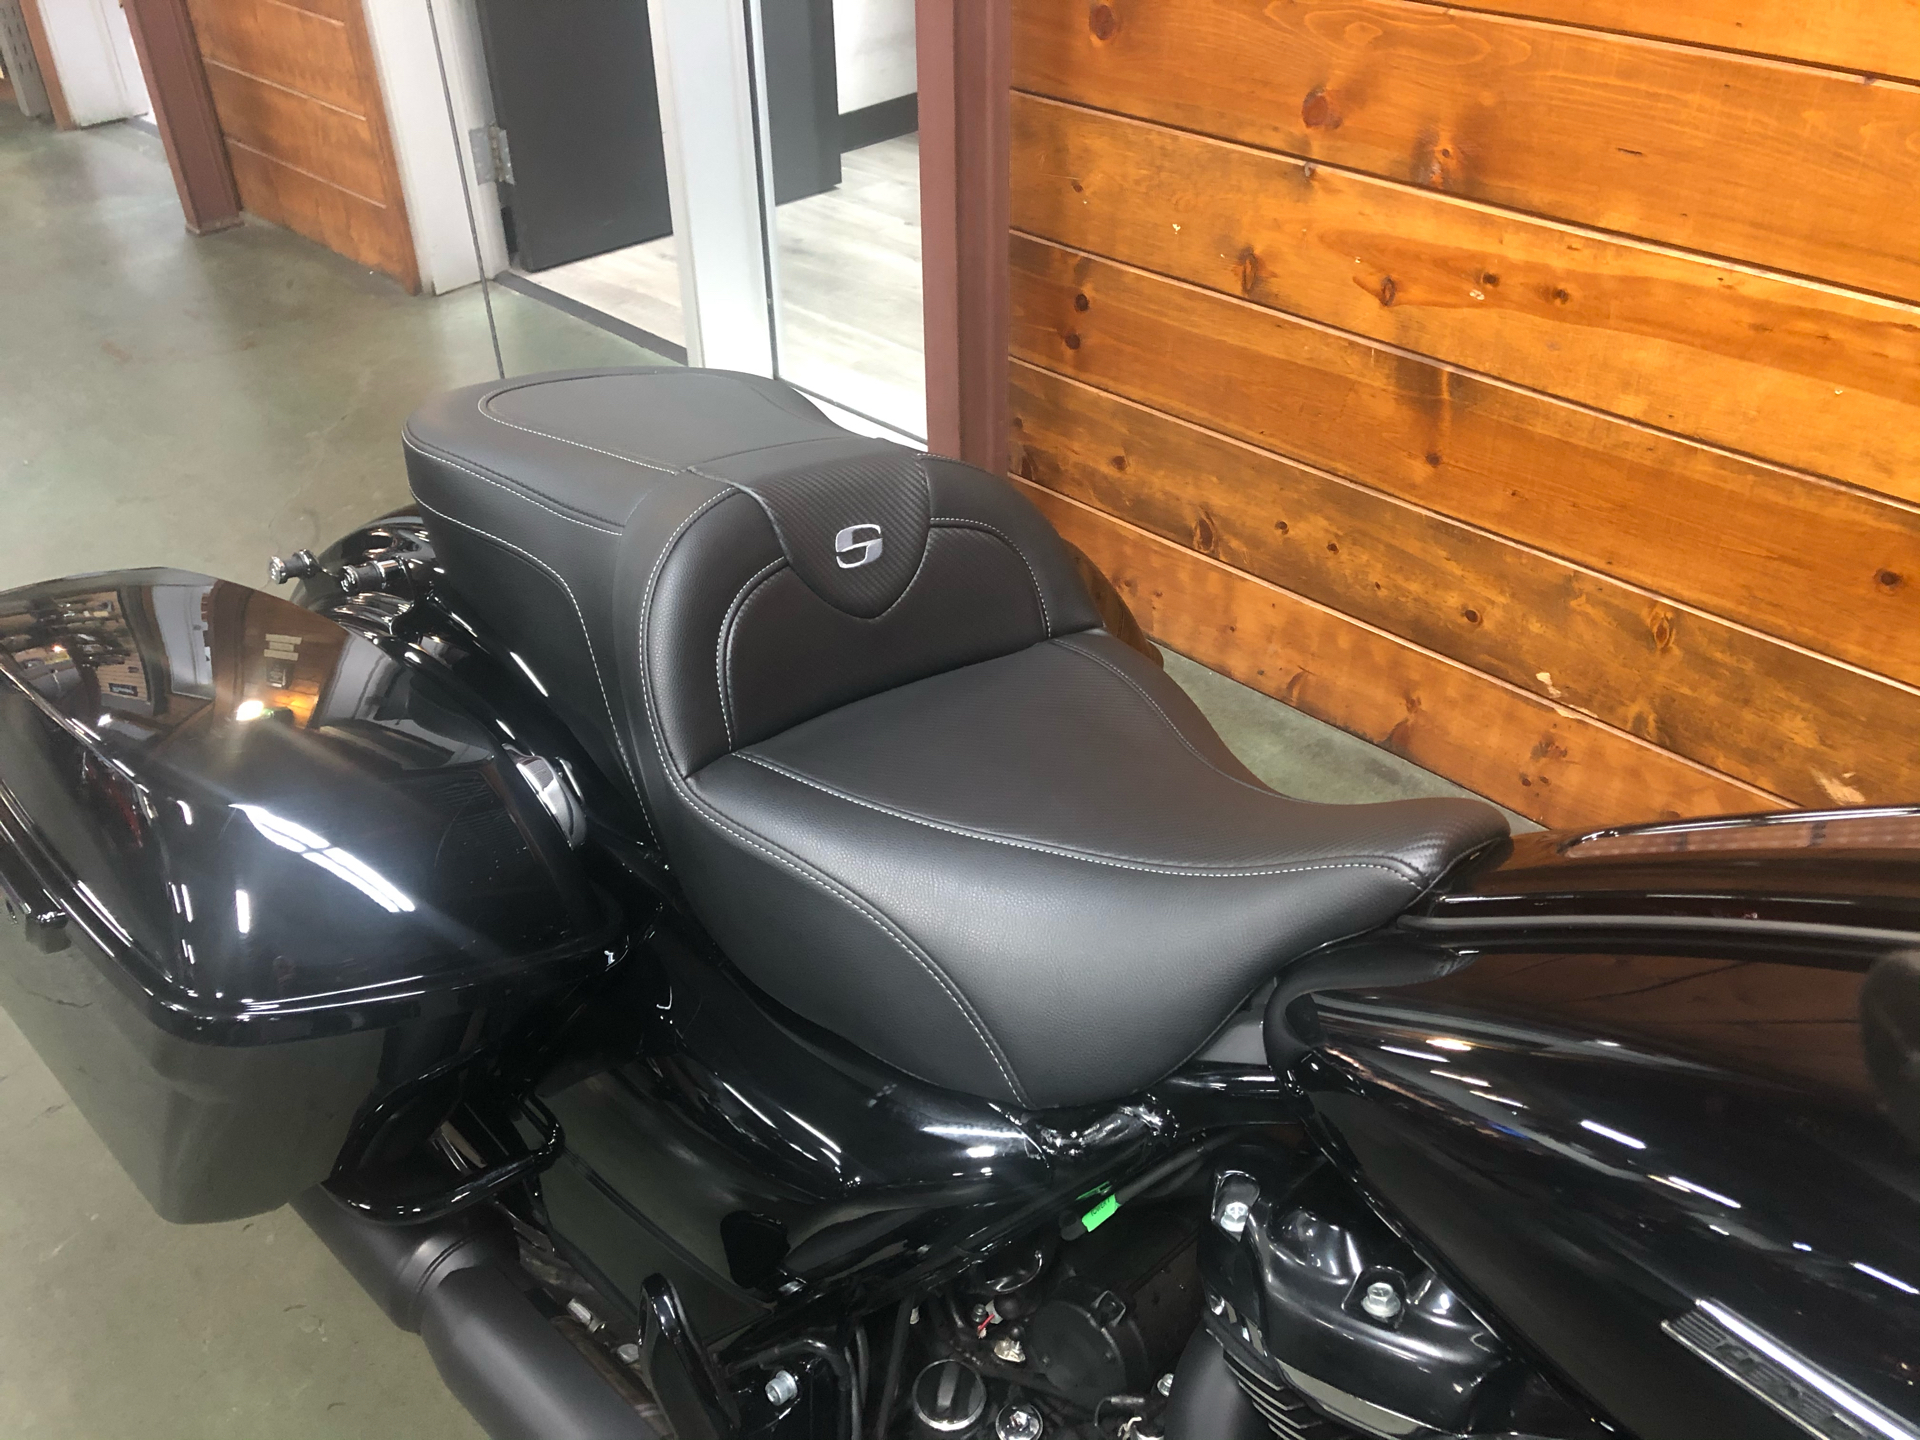 2019 Harley-Davidson Street Glide® Special in San Jose, California - Photo 5